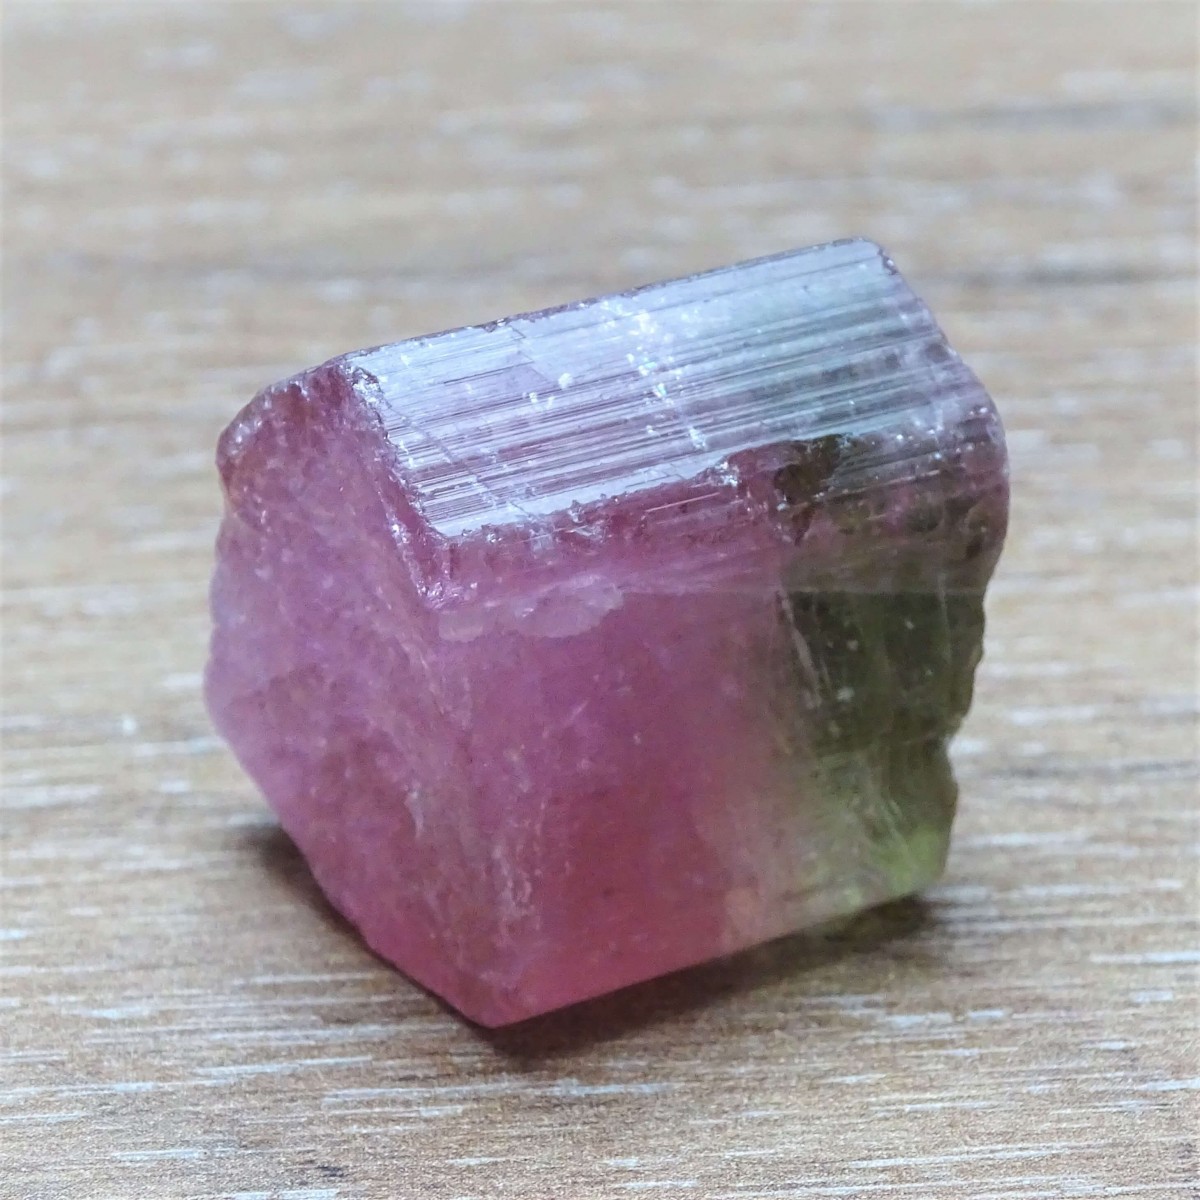 Tourmaline Elbait natural crystal 33.1g, USA